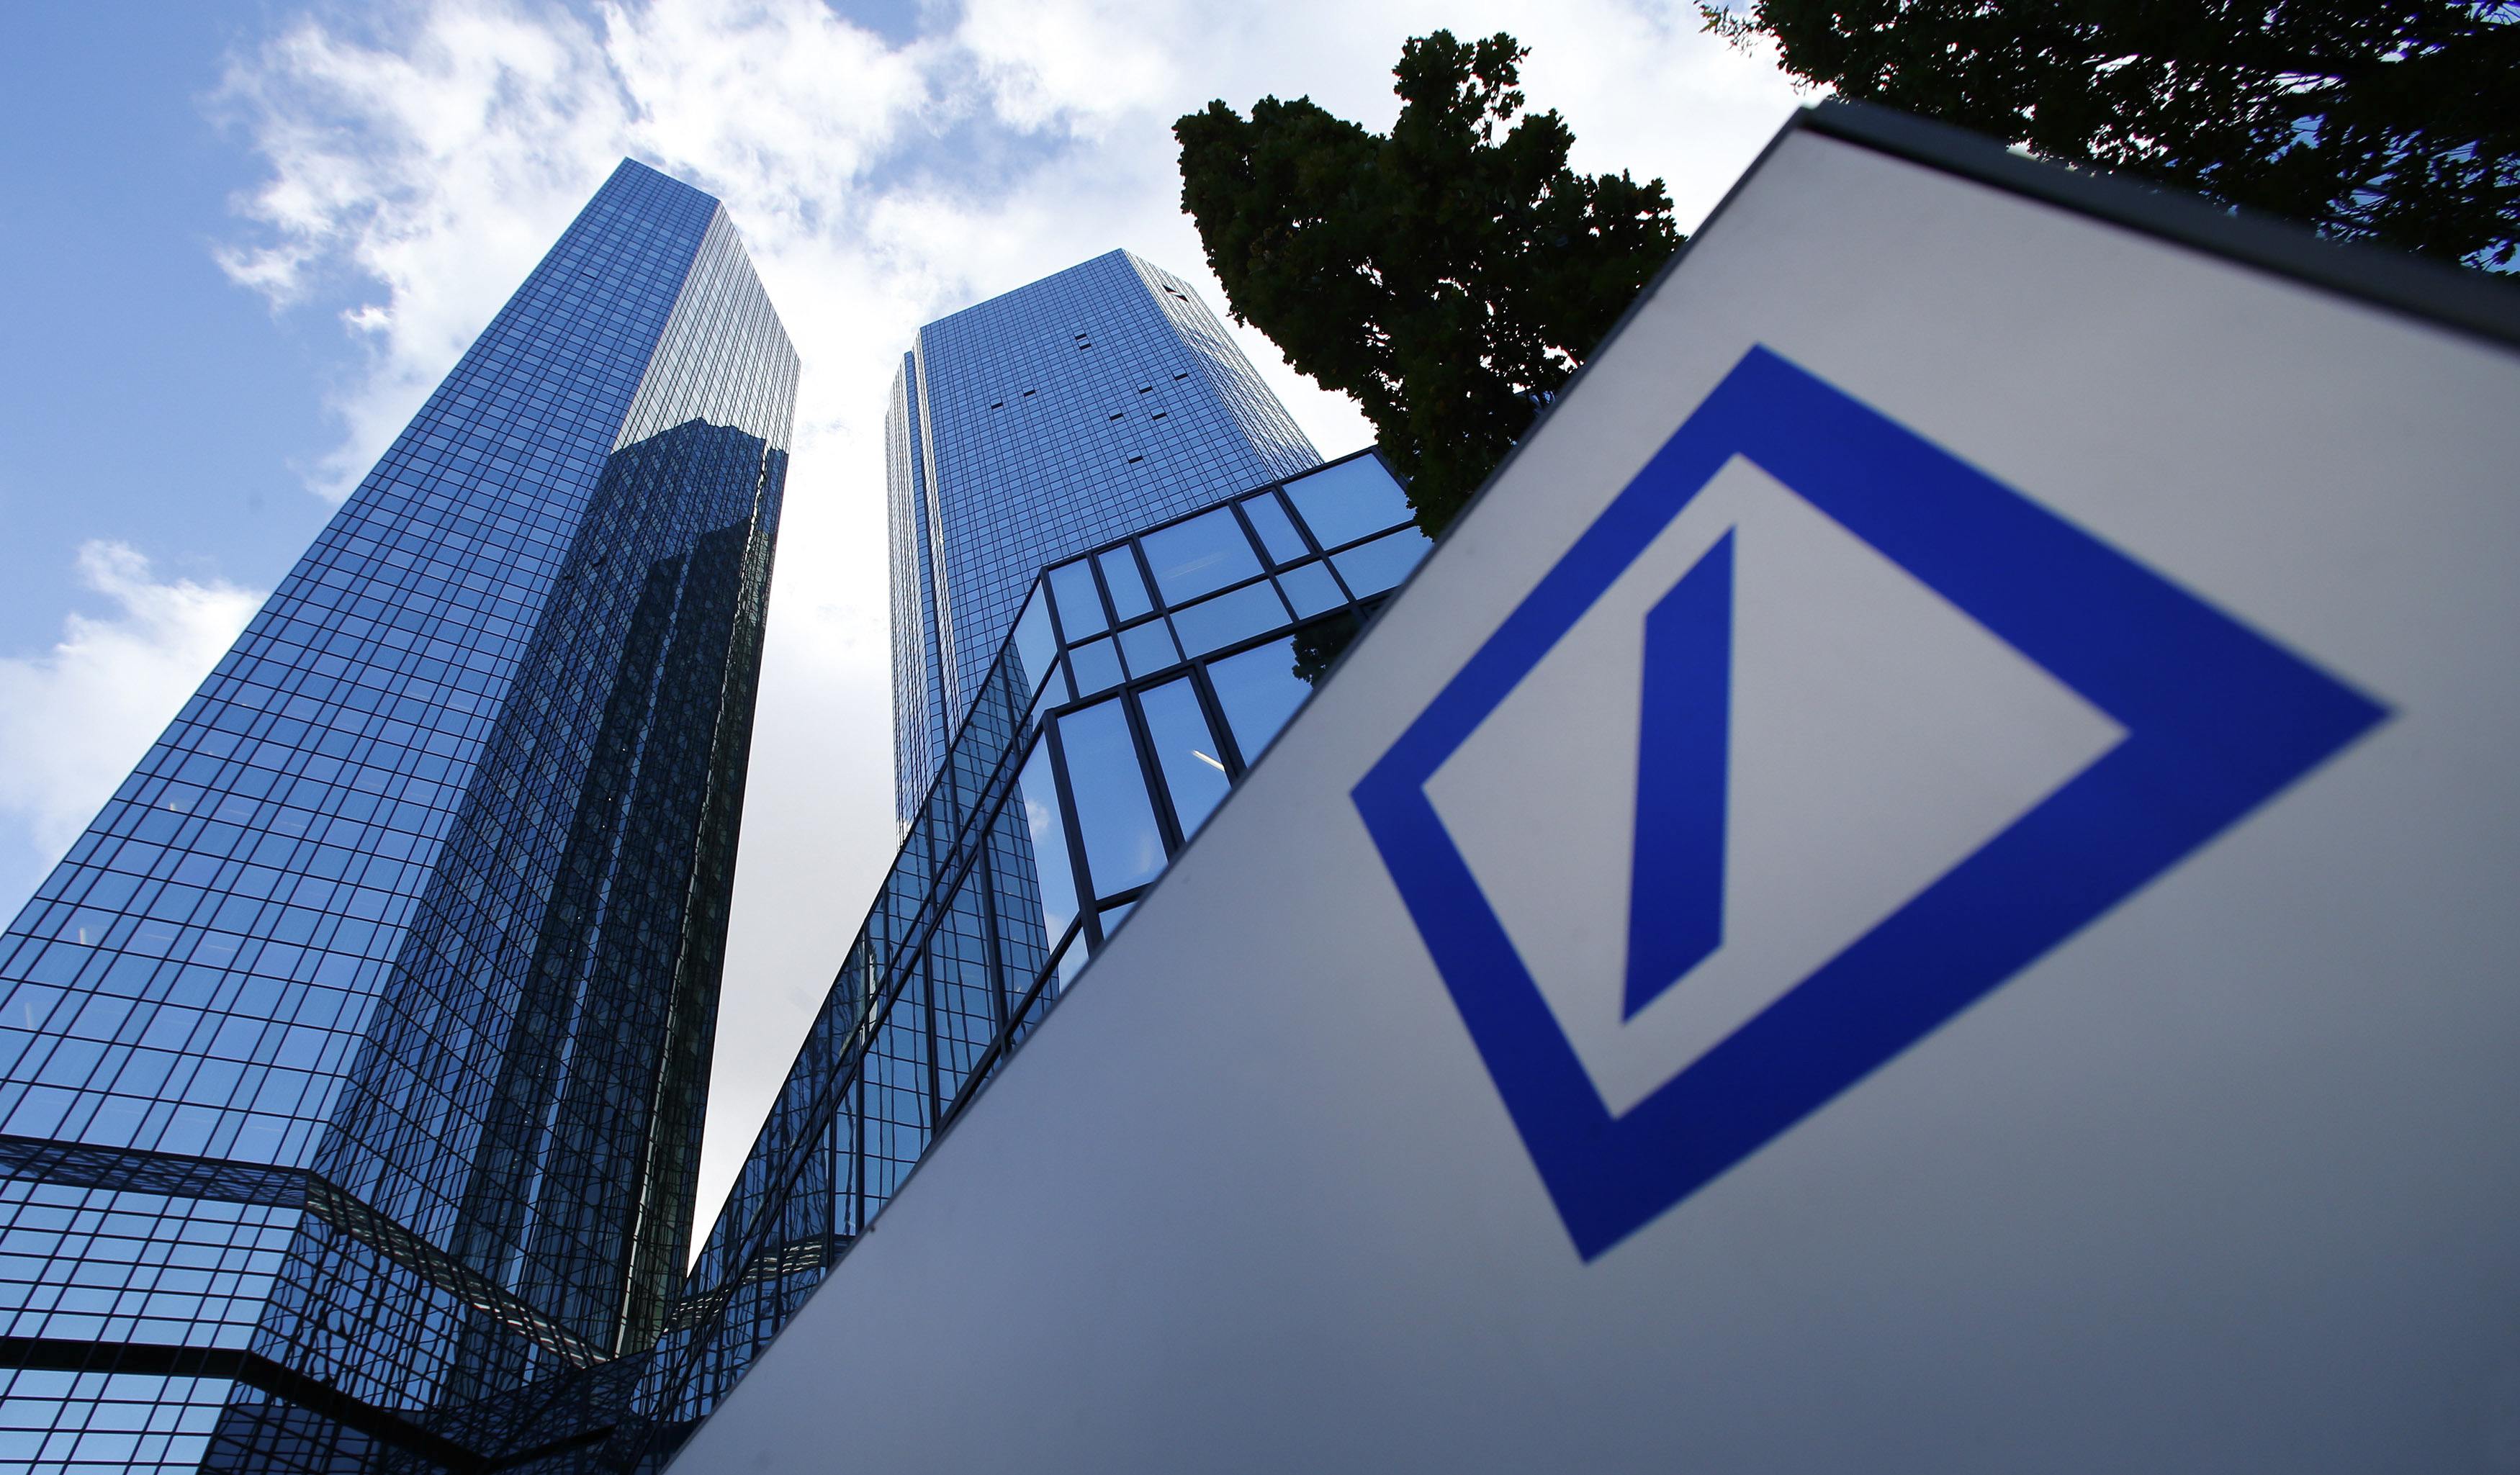 Deutsche Bank Video Brings Blockchain into ‘Real World’